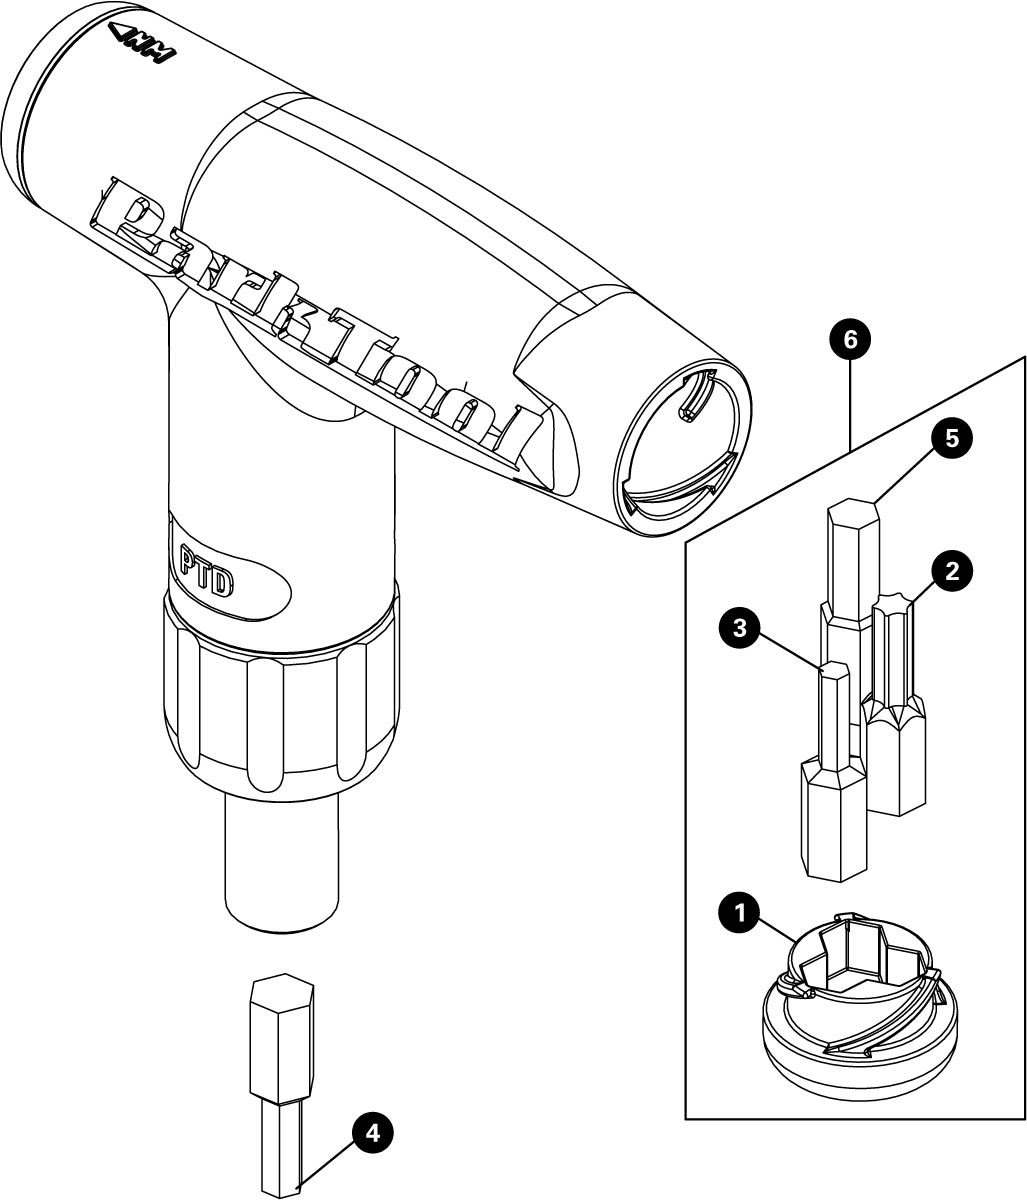 Parts diagram for PTD-6 Preset Torque Driver, click to enlarge